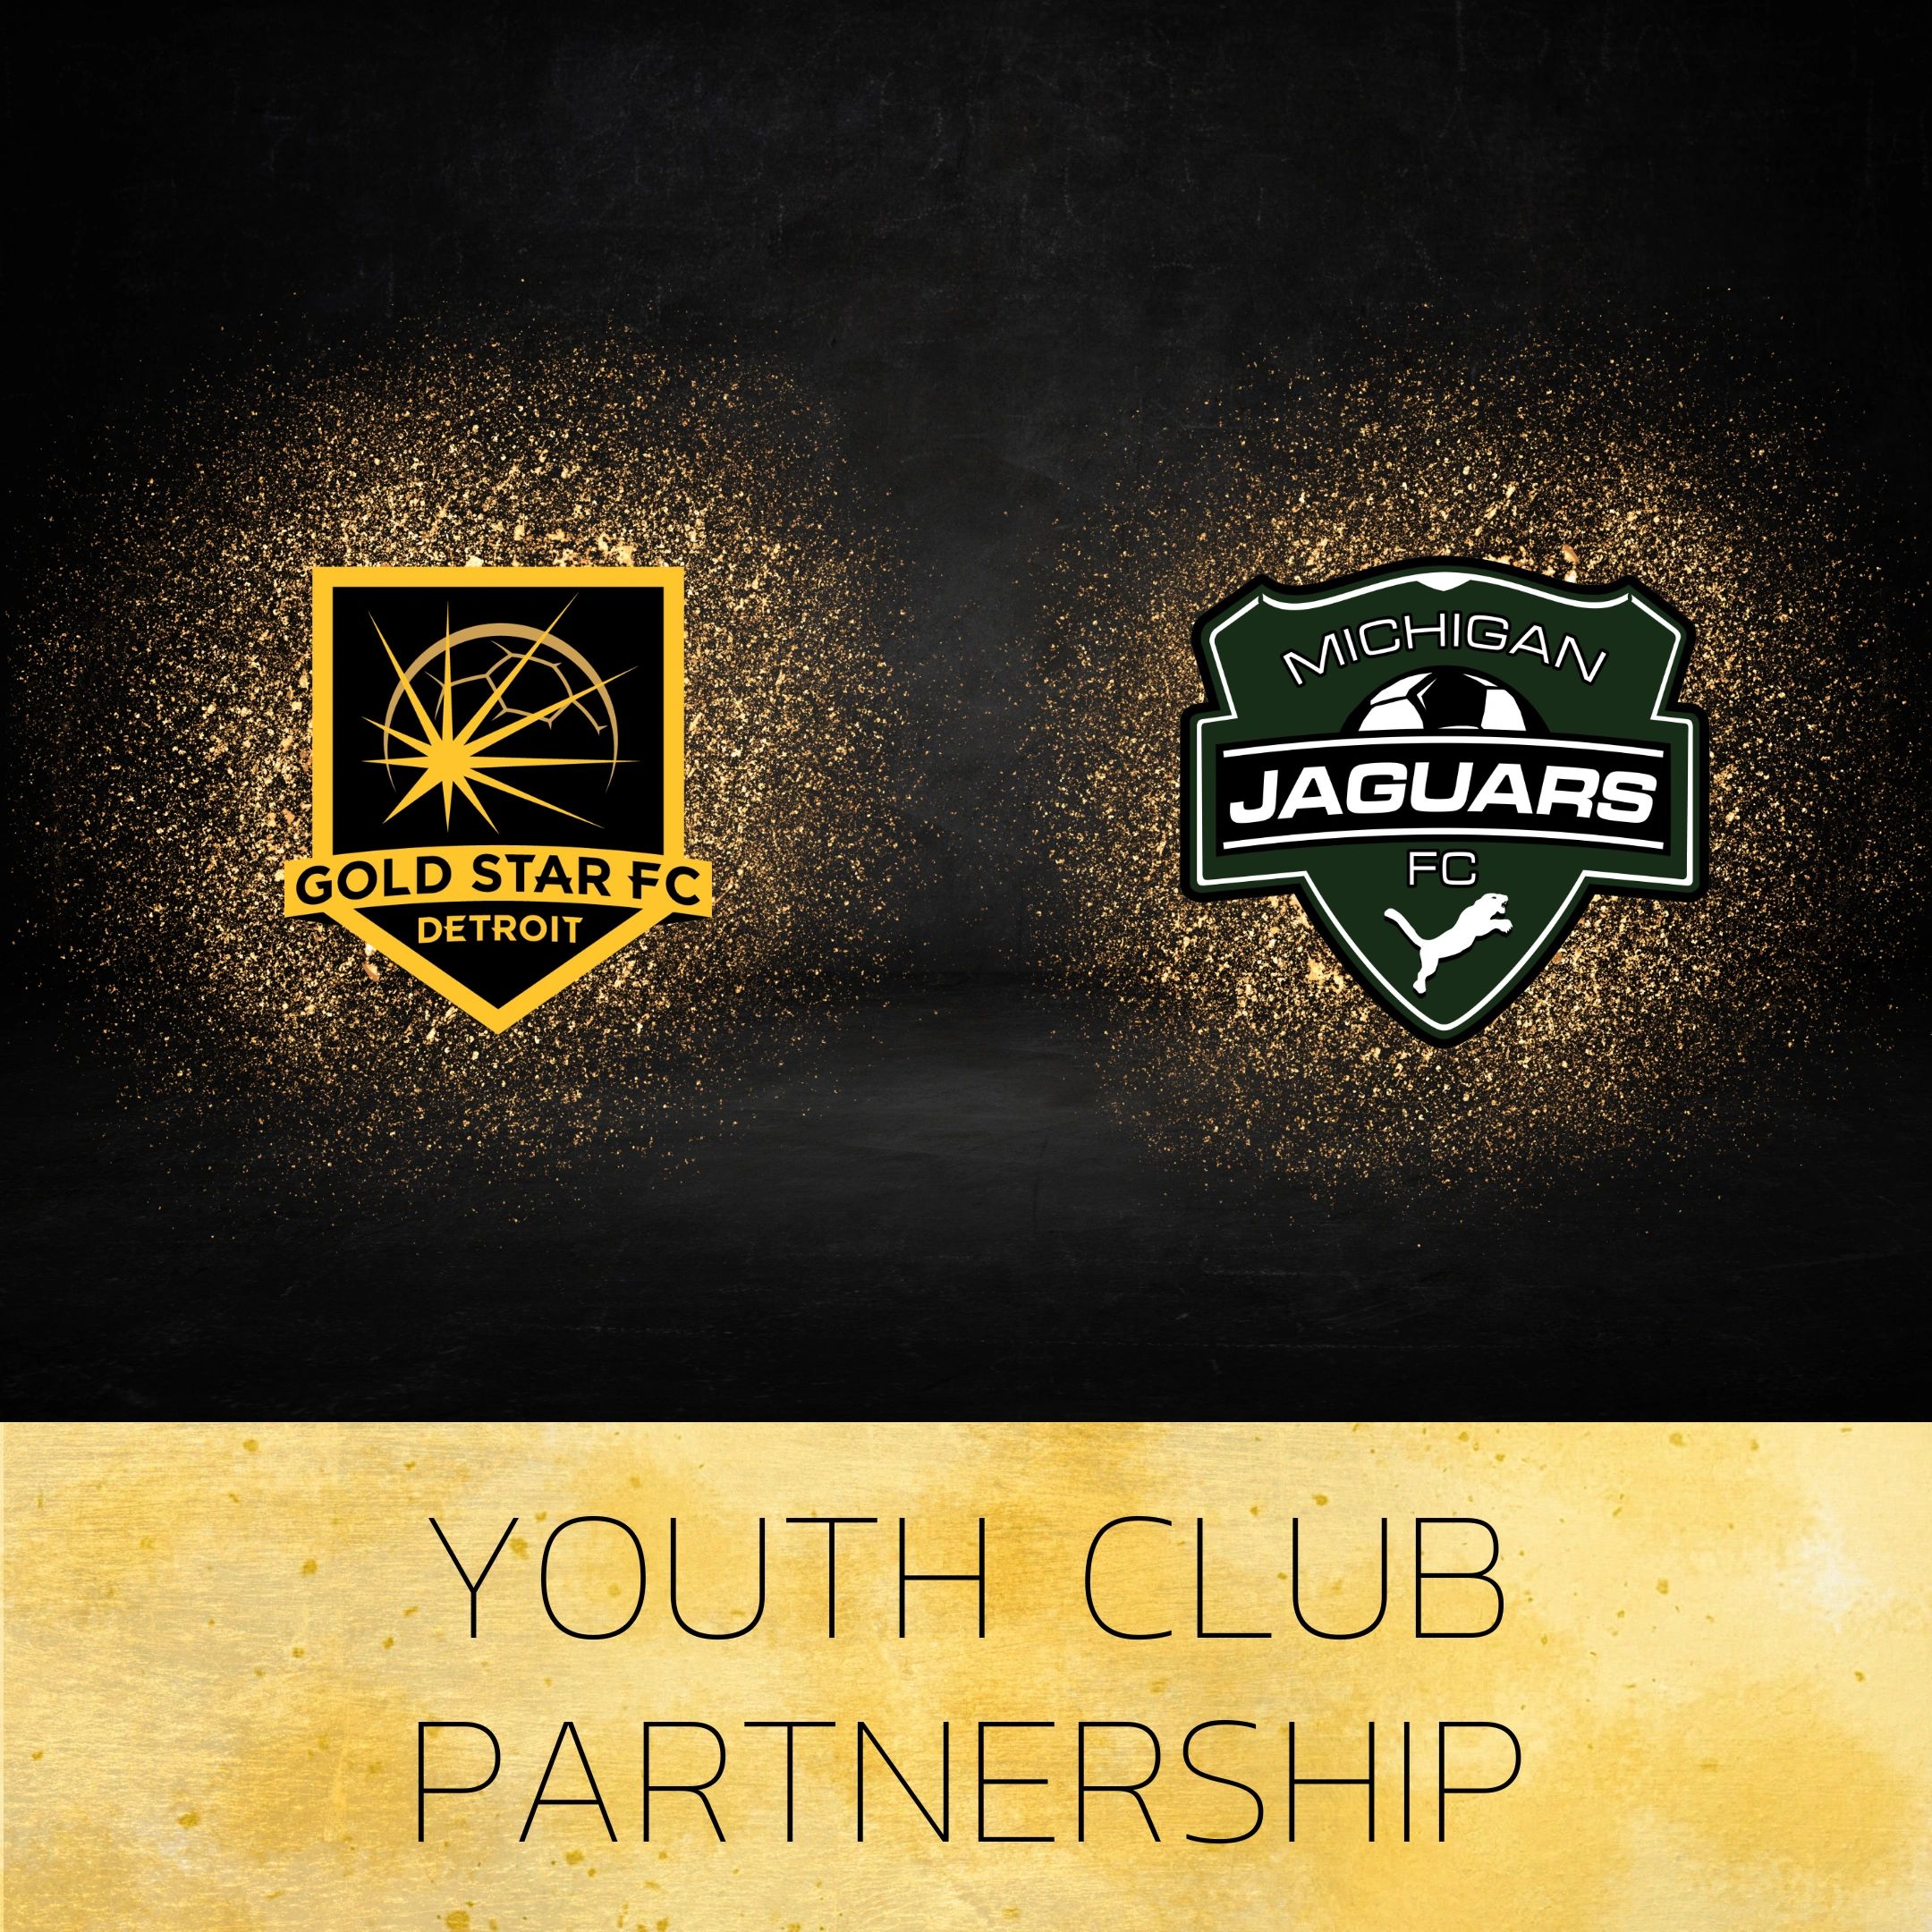 Gold Star FC and Michigan Jaguars FC announce partnership